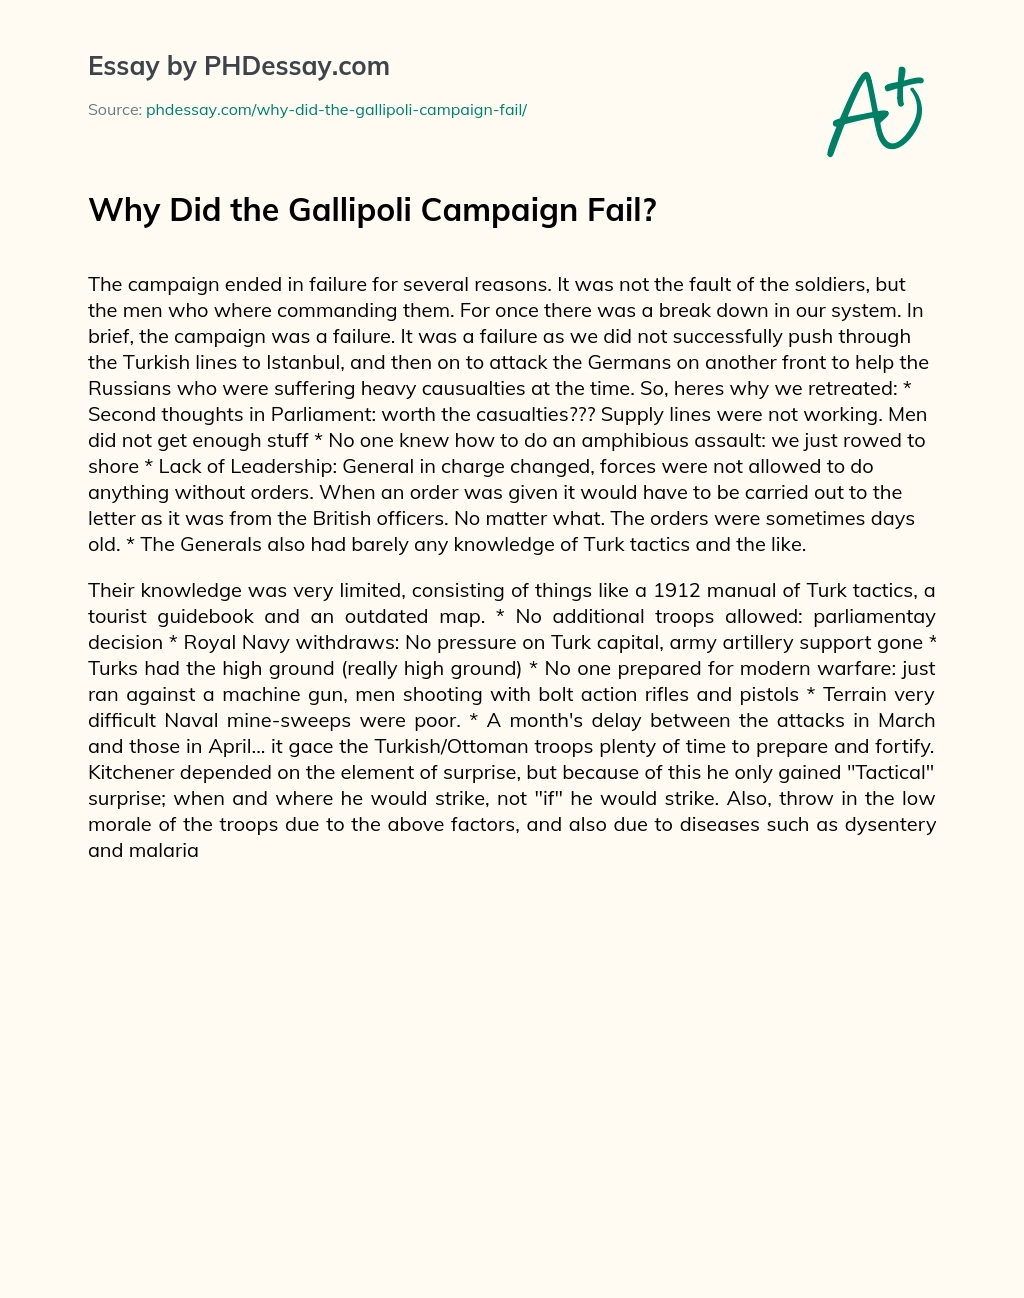 Why Did the Gallipoli Campaign Fail? essay